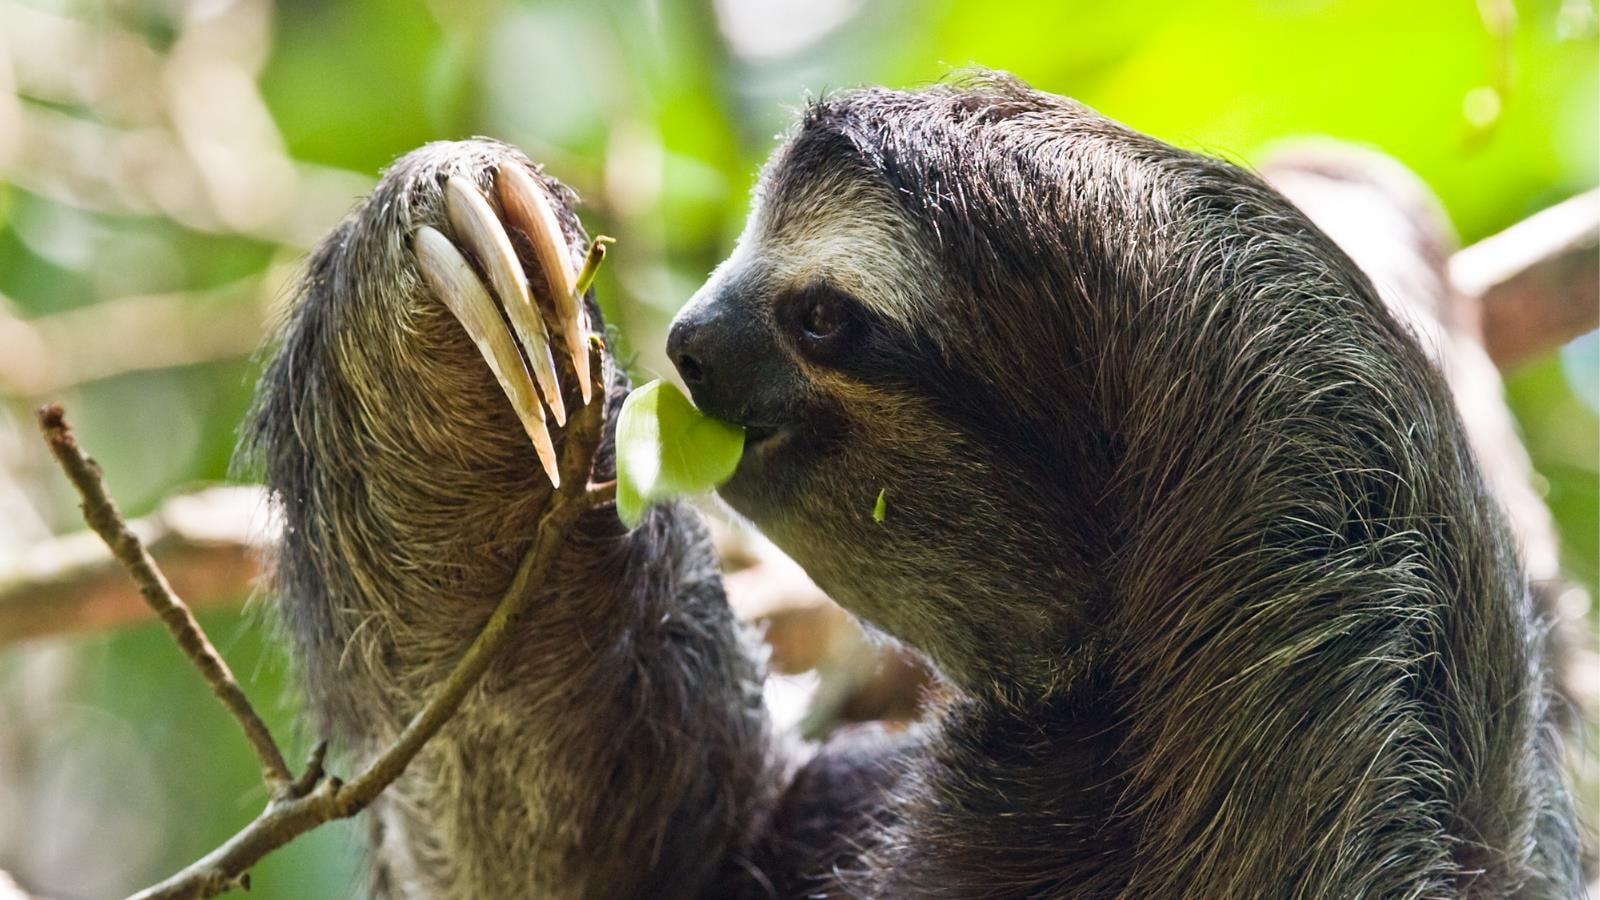 three toed sloth, monkey, animal themes, primate, mammal, animal wildlife